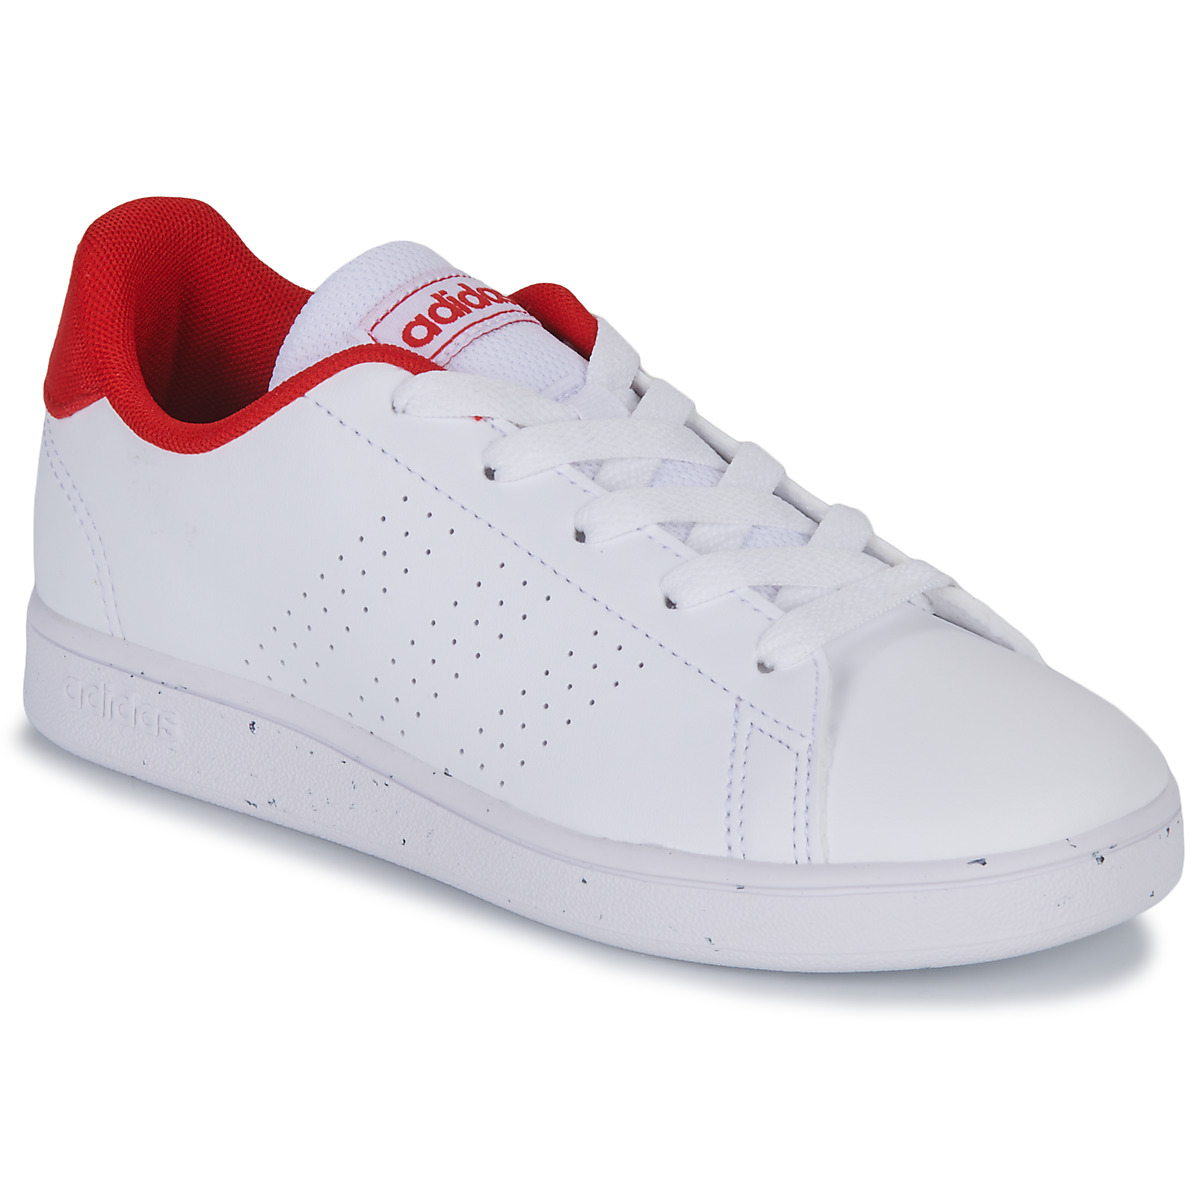 Scarpe Unisex bambino Sneakers basse Adidas Sportswear ADVANTAGE K Bianco / Rosso